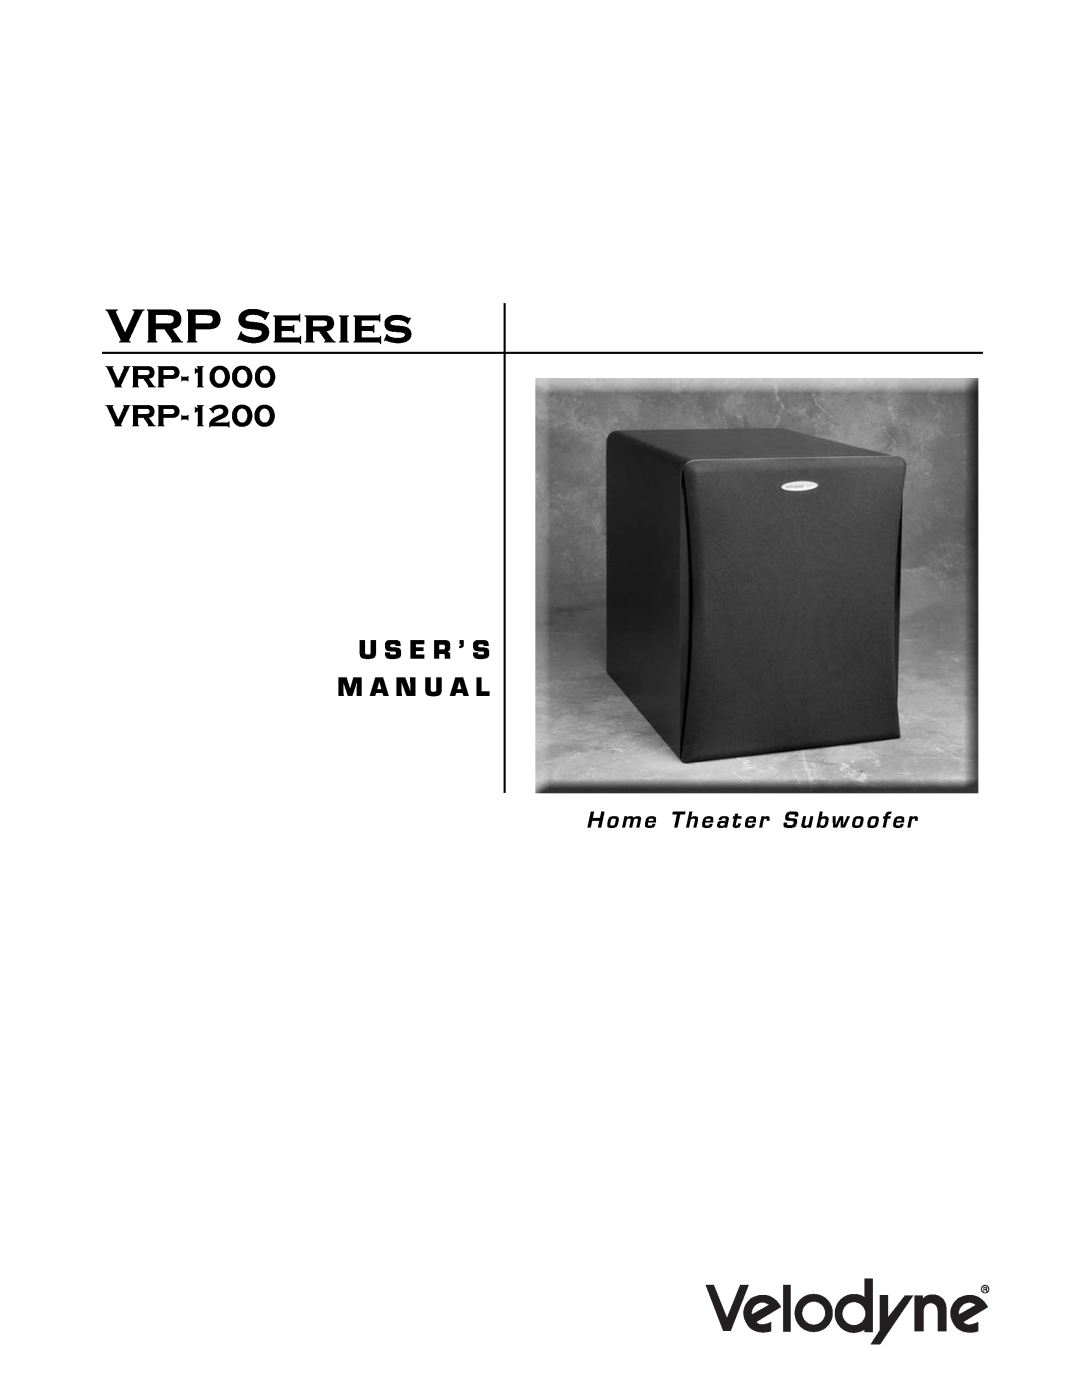 Velodyne Acoustics VRP Series user manual VRP-1000 VRP-1200, U S E R ’ S M A N U A L, Home Theater Subwoofer 